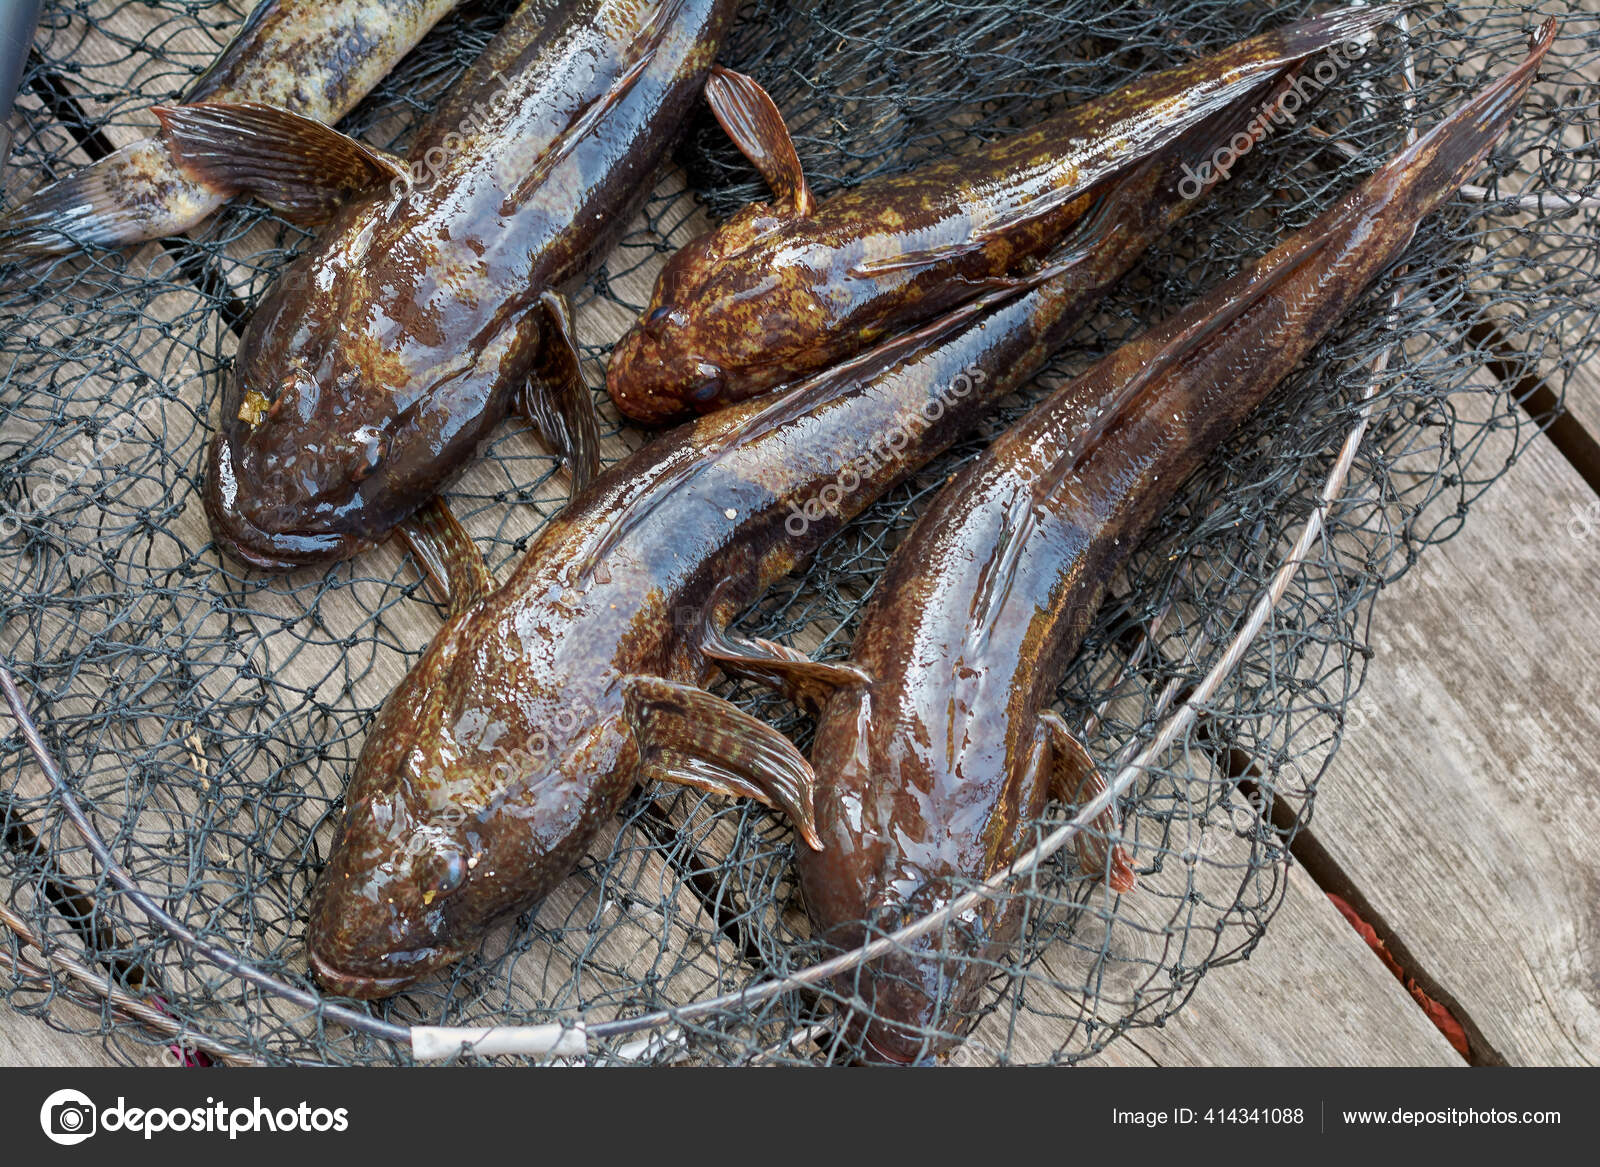 https://st4.depositphotos.com/8525010/41434/i/1600/depositphotos_414341088-stock-photo-amateur-fishing-fresh-fish-fishing.jpg